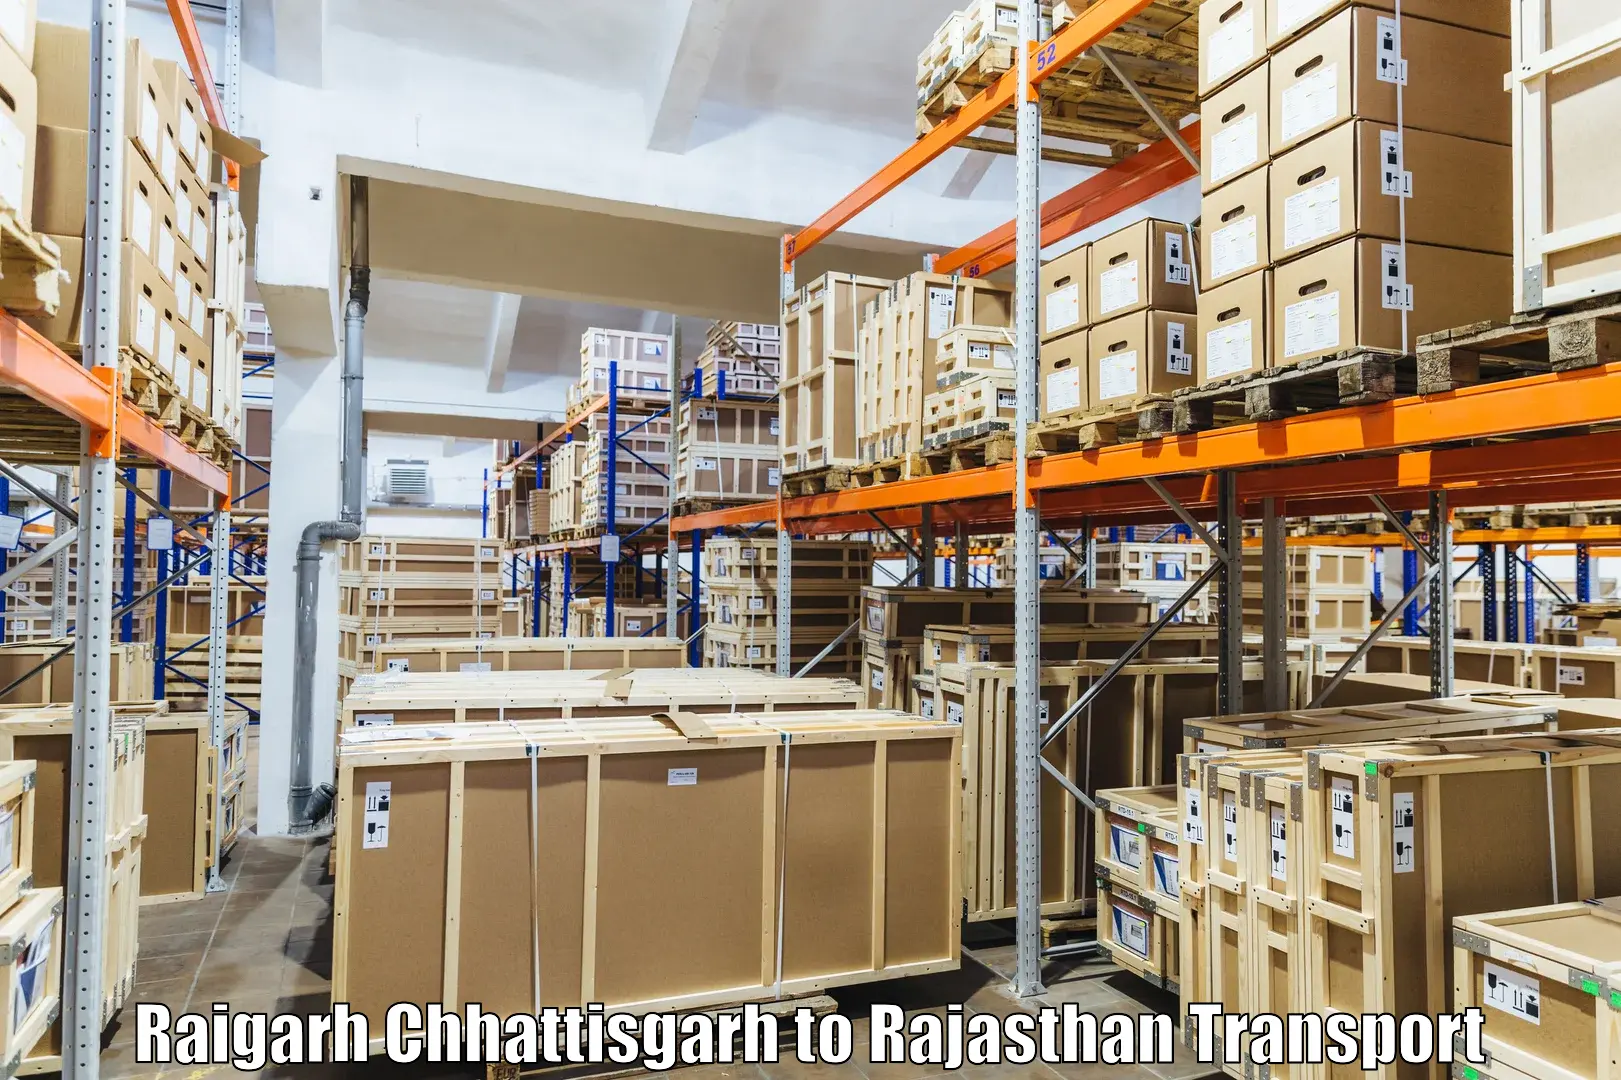 Two wheeler parcel service Raigarh Chhattisgarh to Piparcity